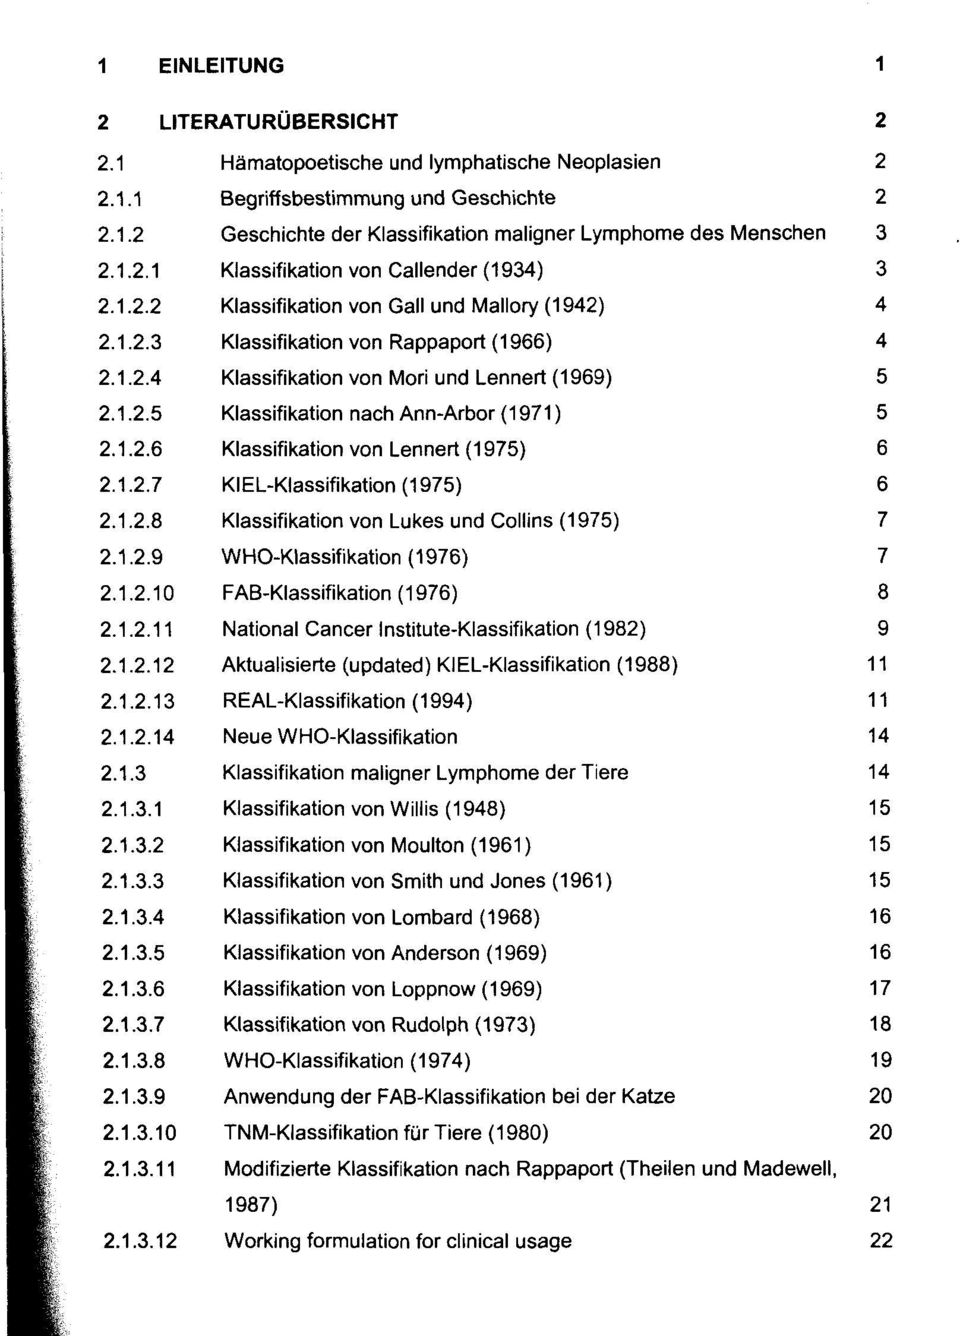 1.2.6 Klassifikation von Lennert (1975) 6 2.1.2.7 KIEL-Klassifikation (1975) 6 2.1.2.8 Klassifikation von Lukesund Collins (1975) 7 2.1.2.9 WHO-Klassifikation (1976) 7 2.1.2.10 FAB-Klassifikation(1976) 8 2.